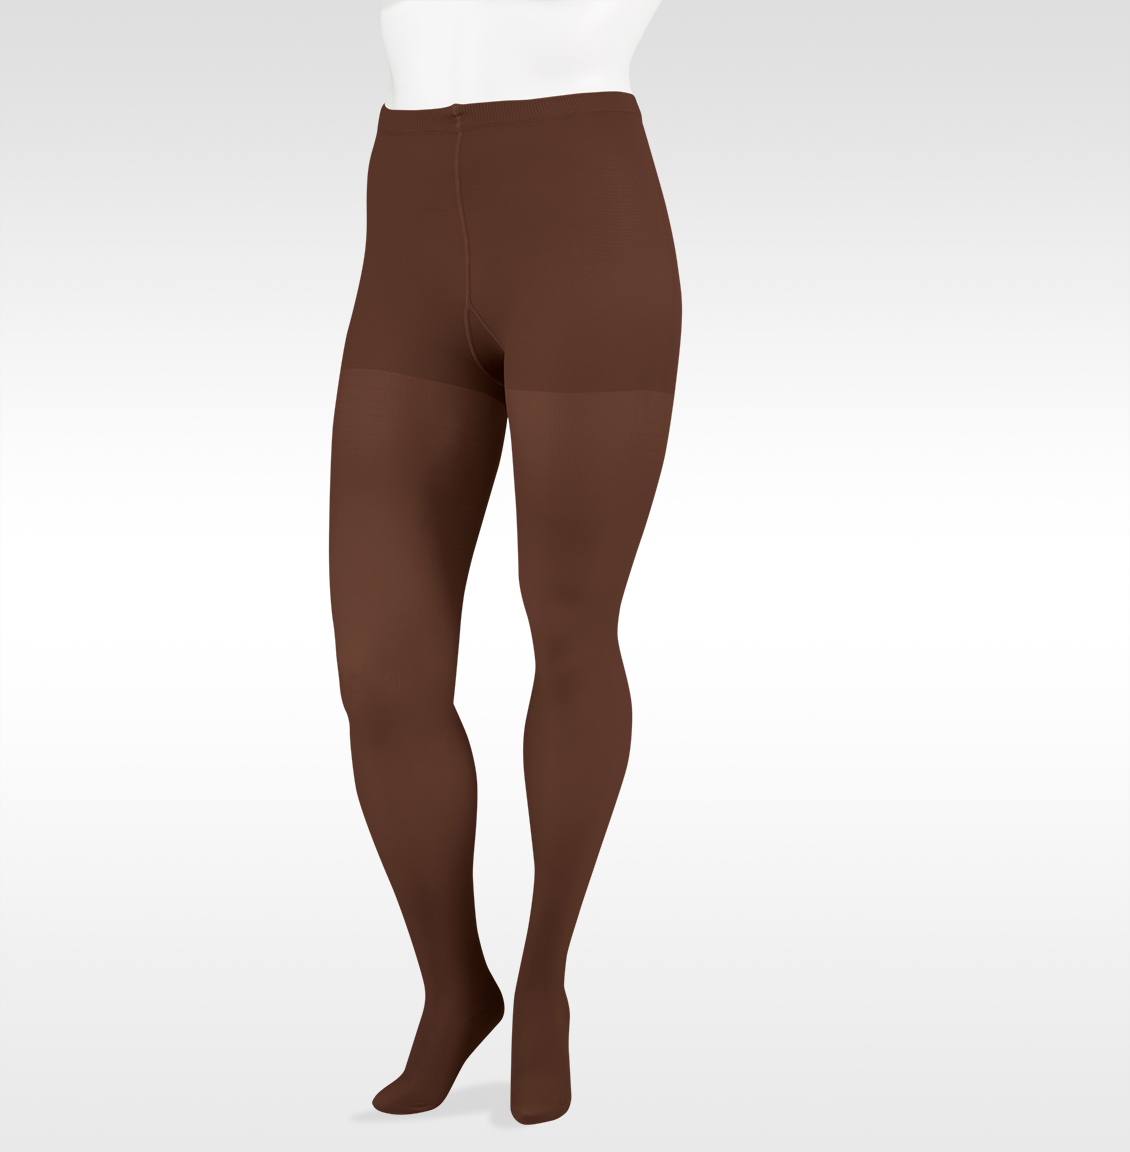 JDEFEG Pantyhose for Women Design Men Pantyhose High Glossy